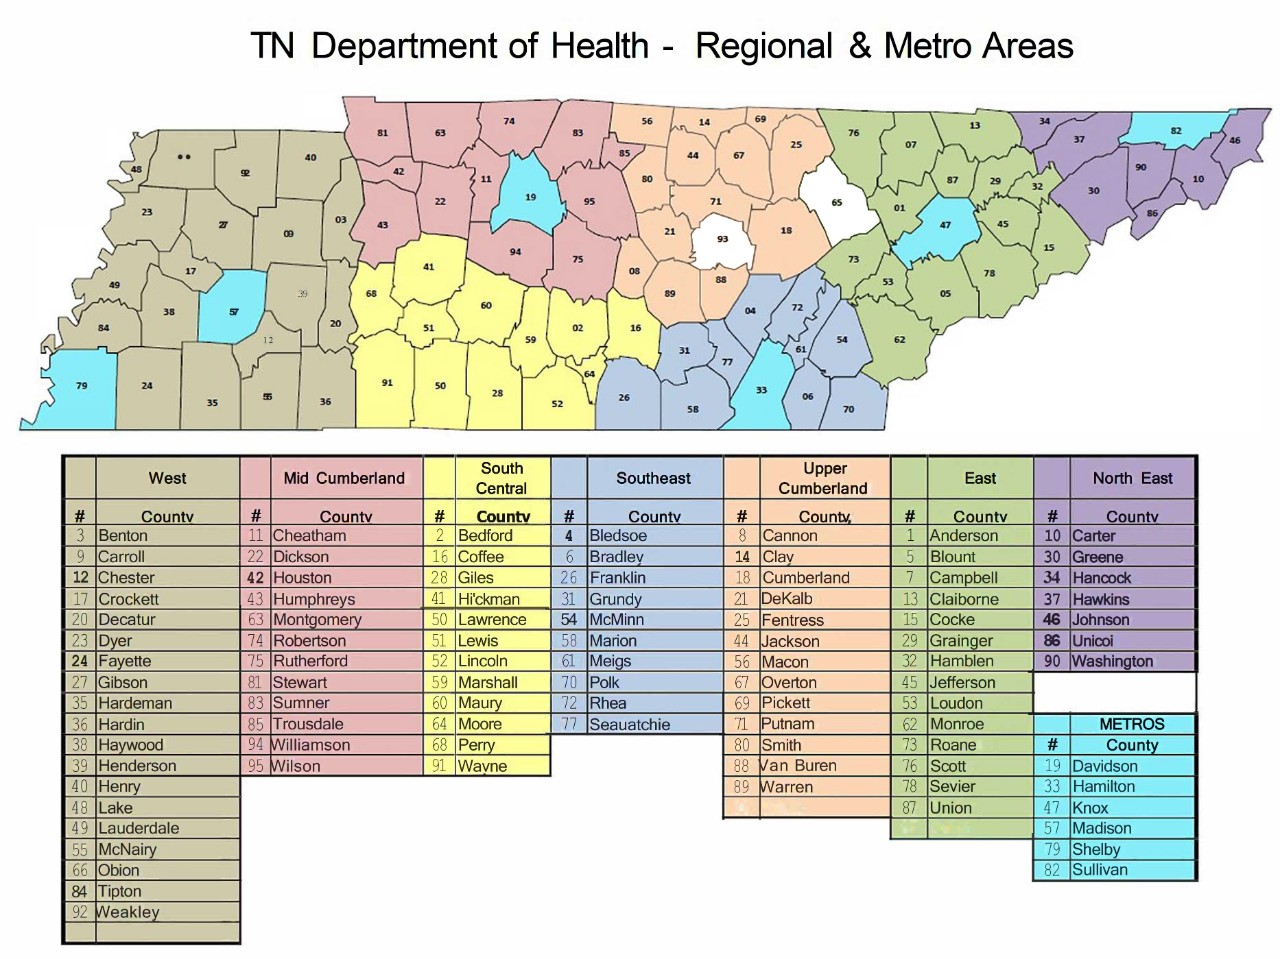 Dental Regional and Metro Areas